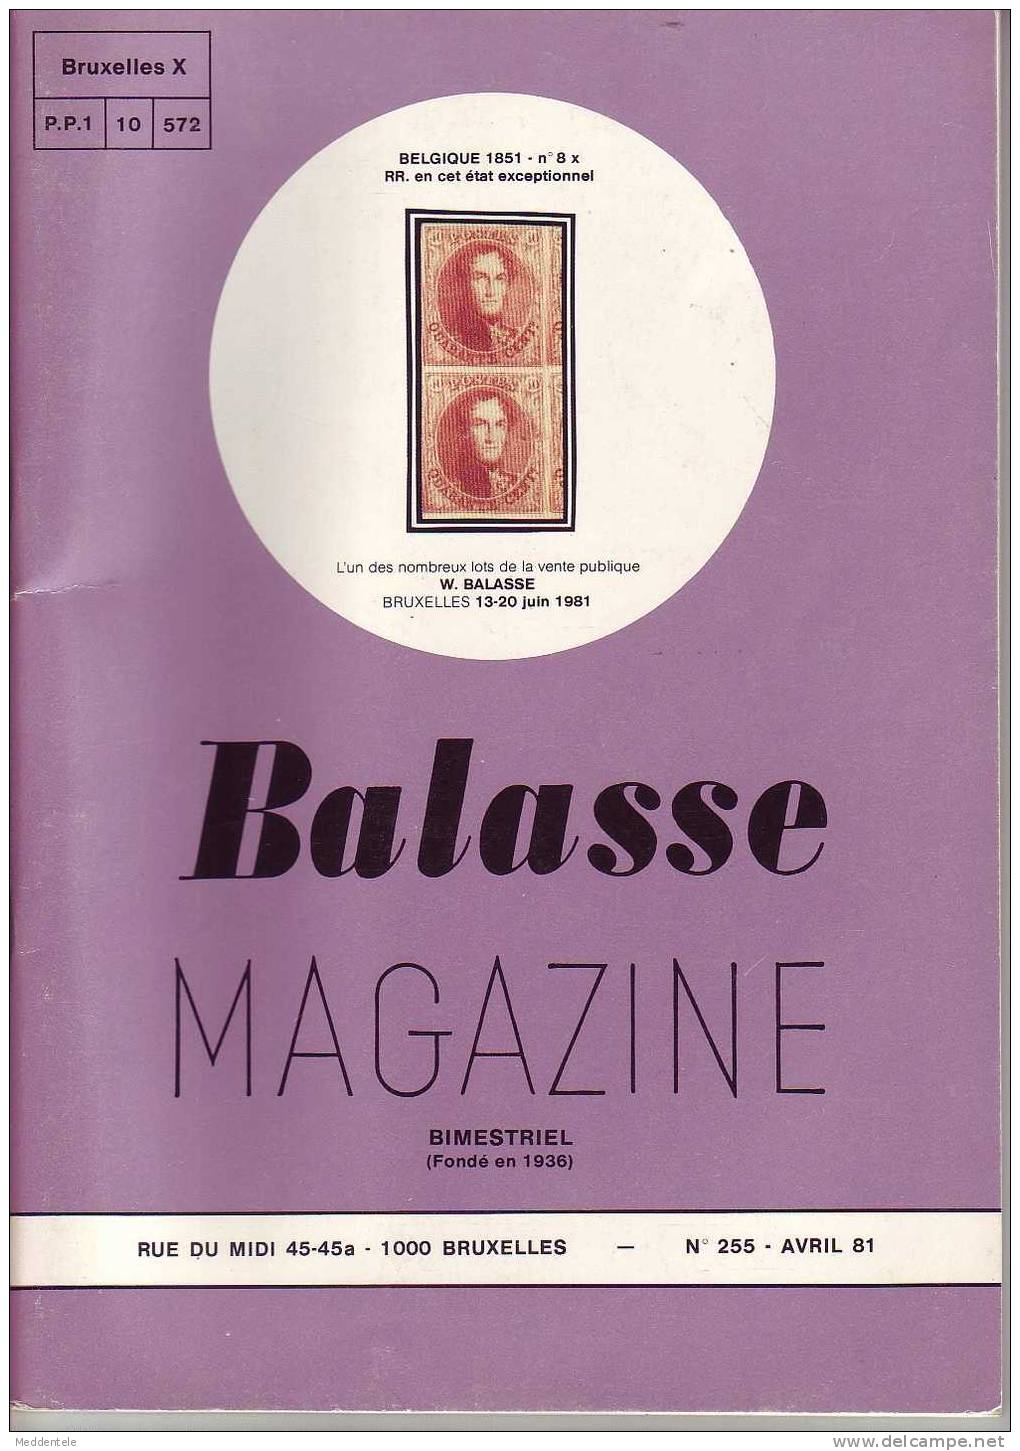 BALASSE MAGAZINE N° 255 - French (from 1941)